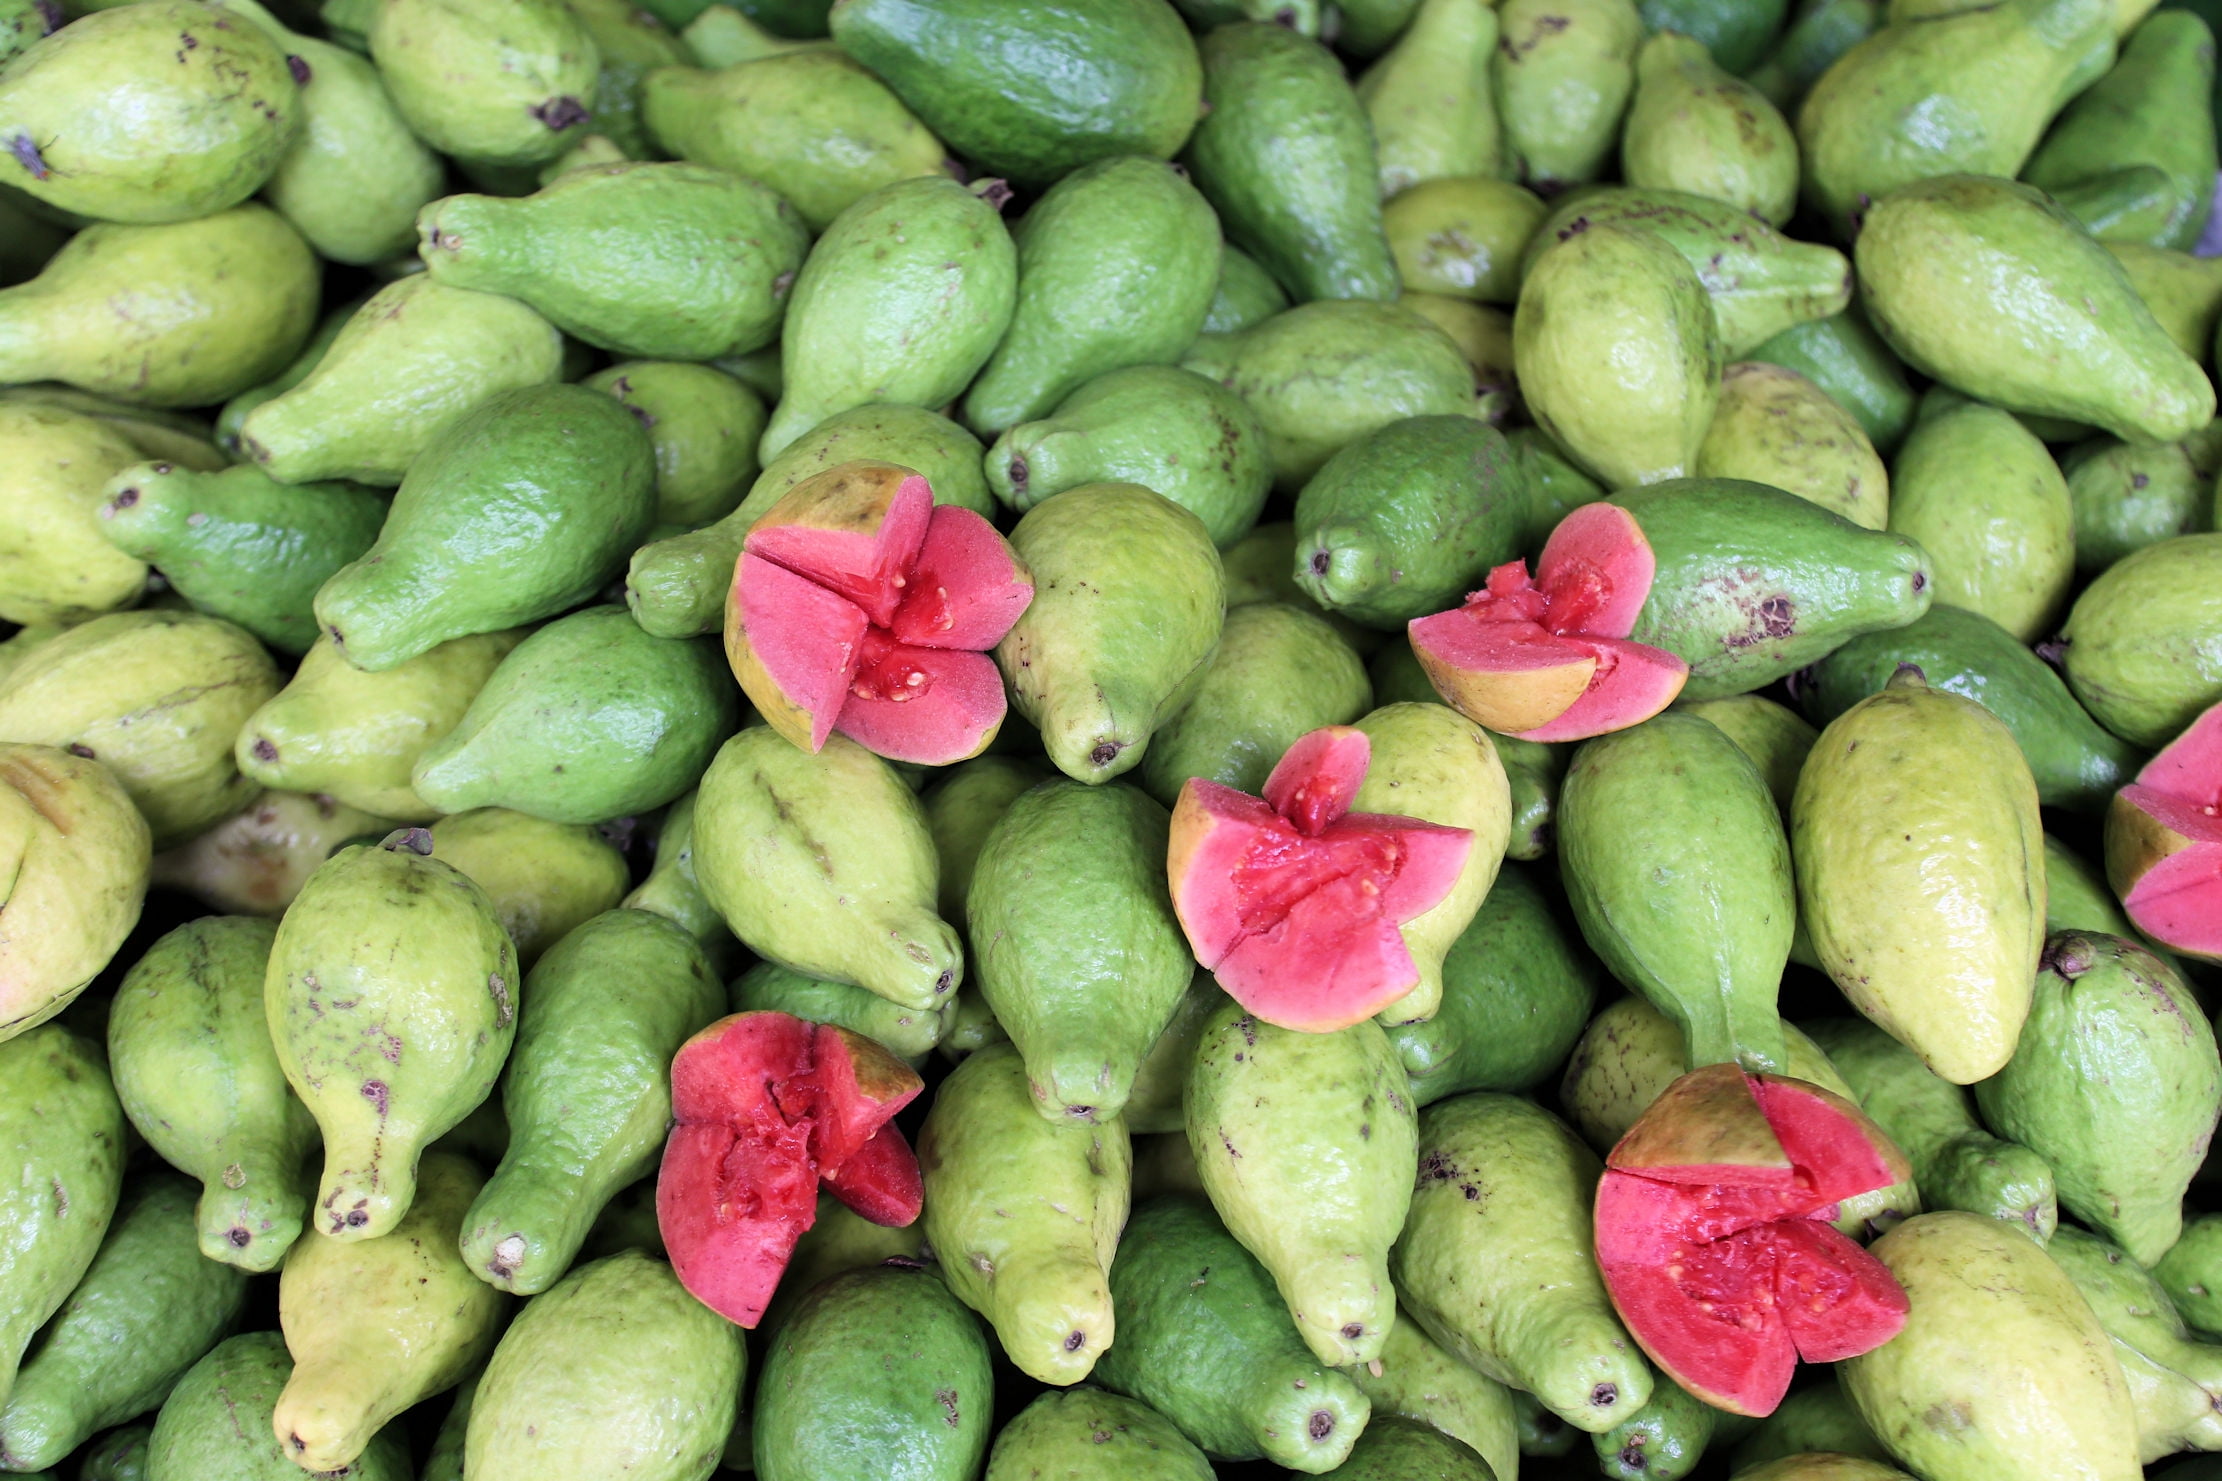 Edible, Fast, Fragrant Guava White Free Ship Red Psidium guajava Tree Seeds 